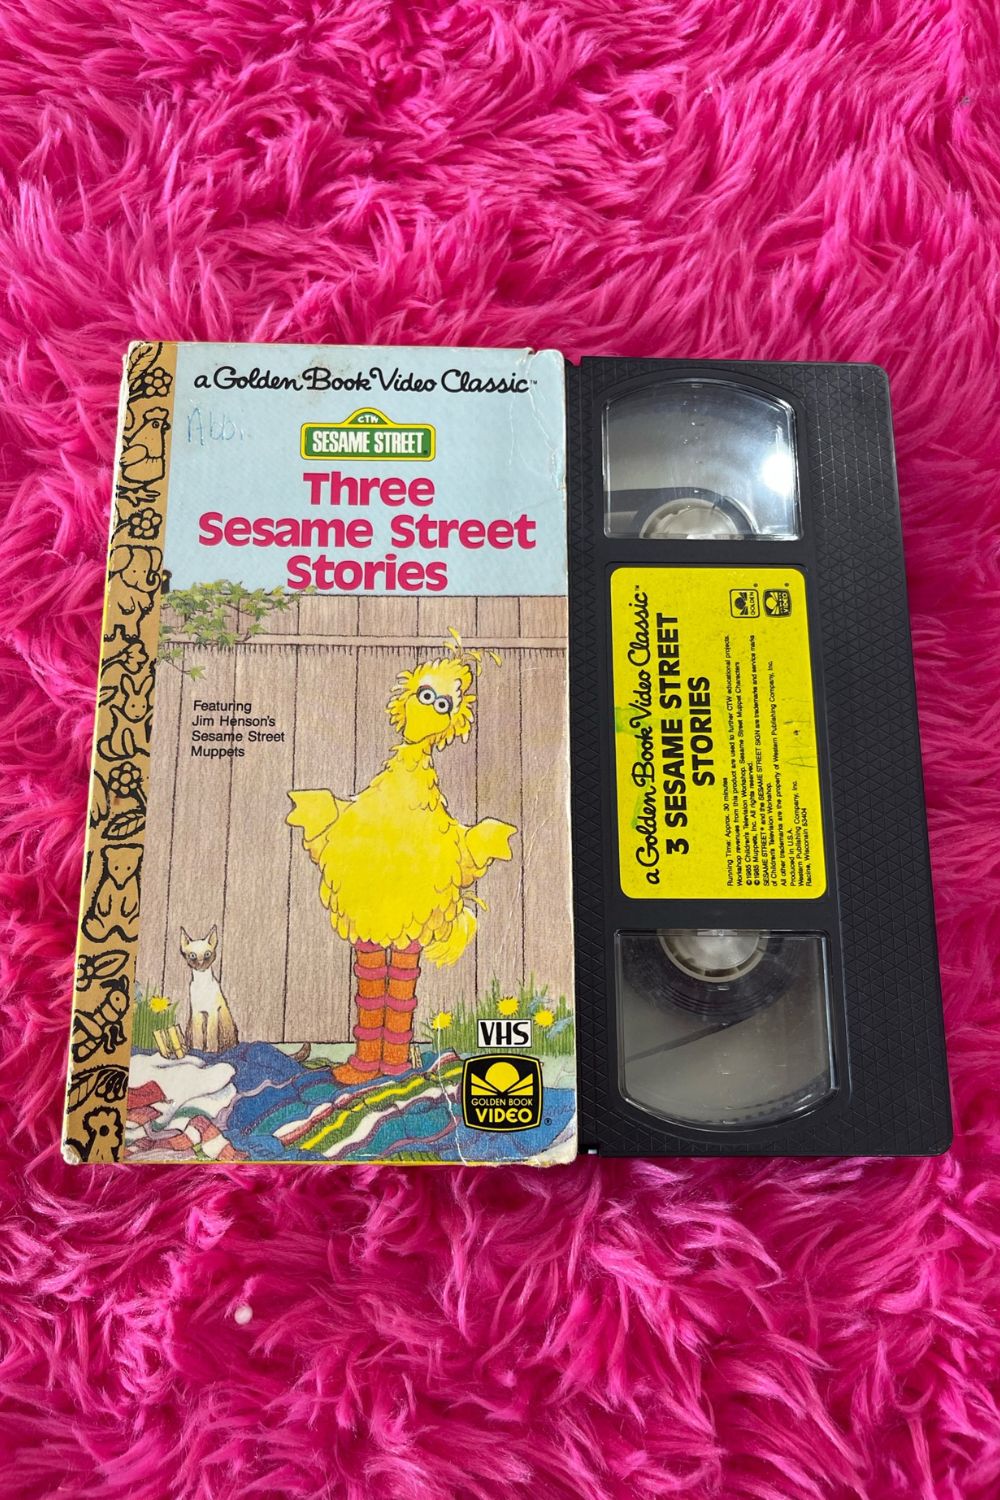 SESAME STREET STORIES VHS*